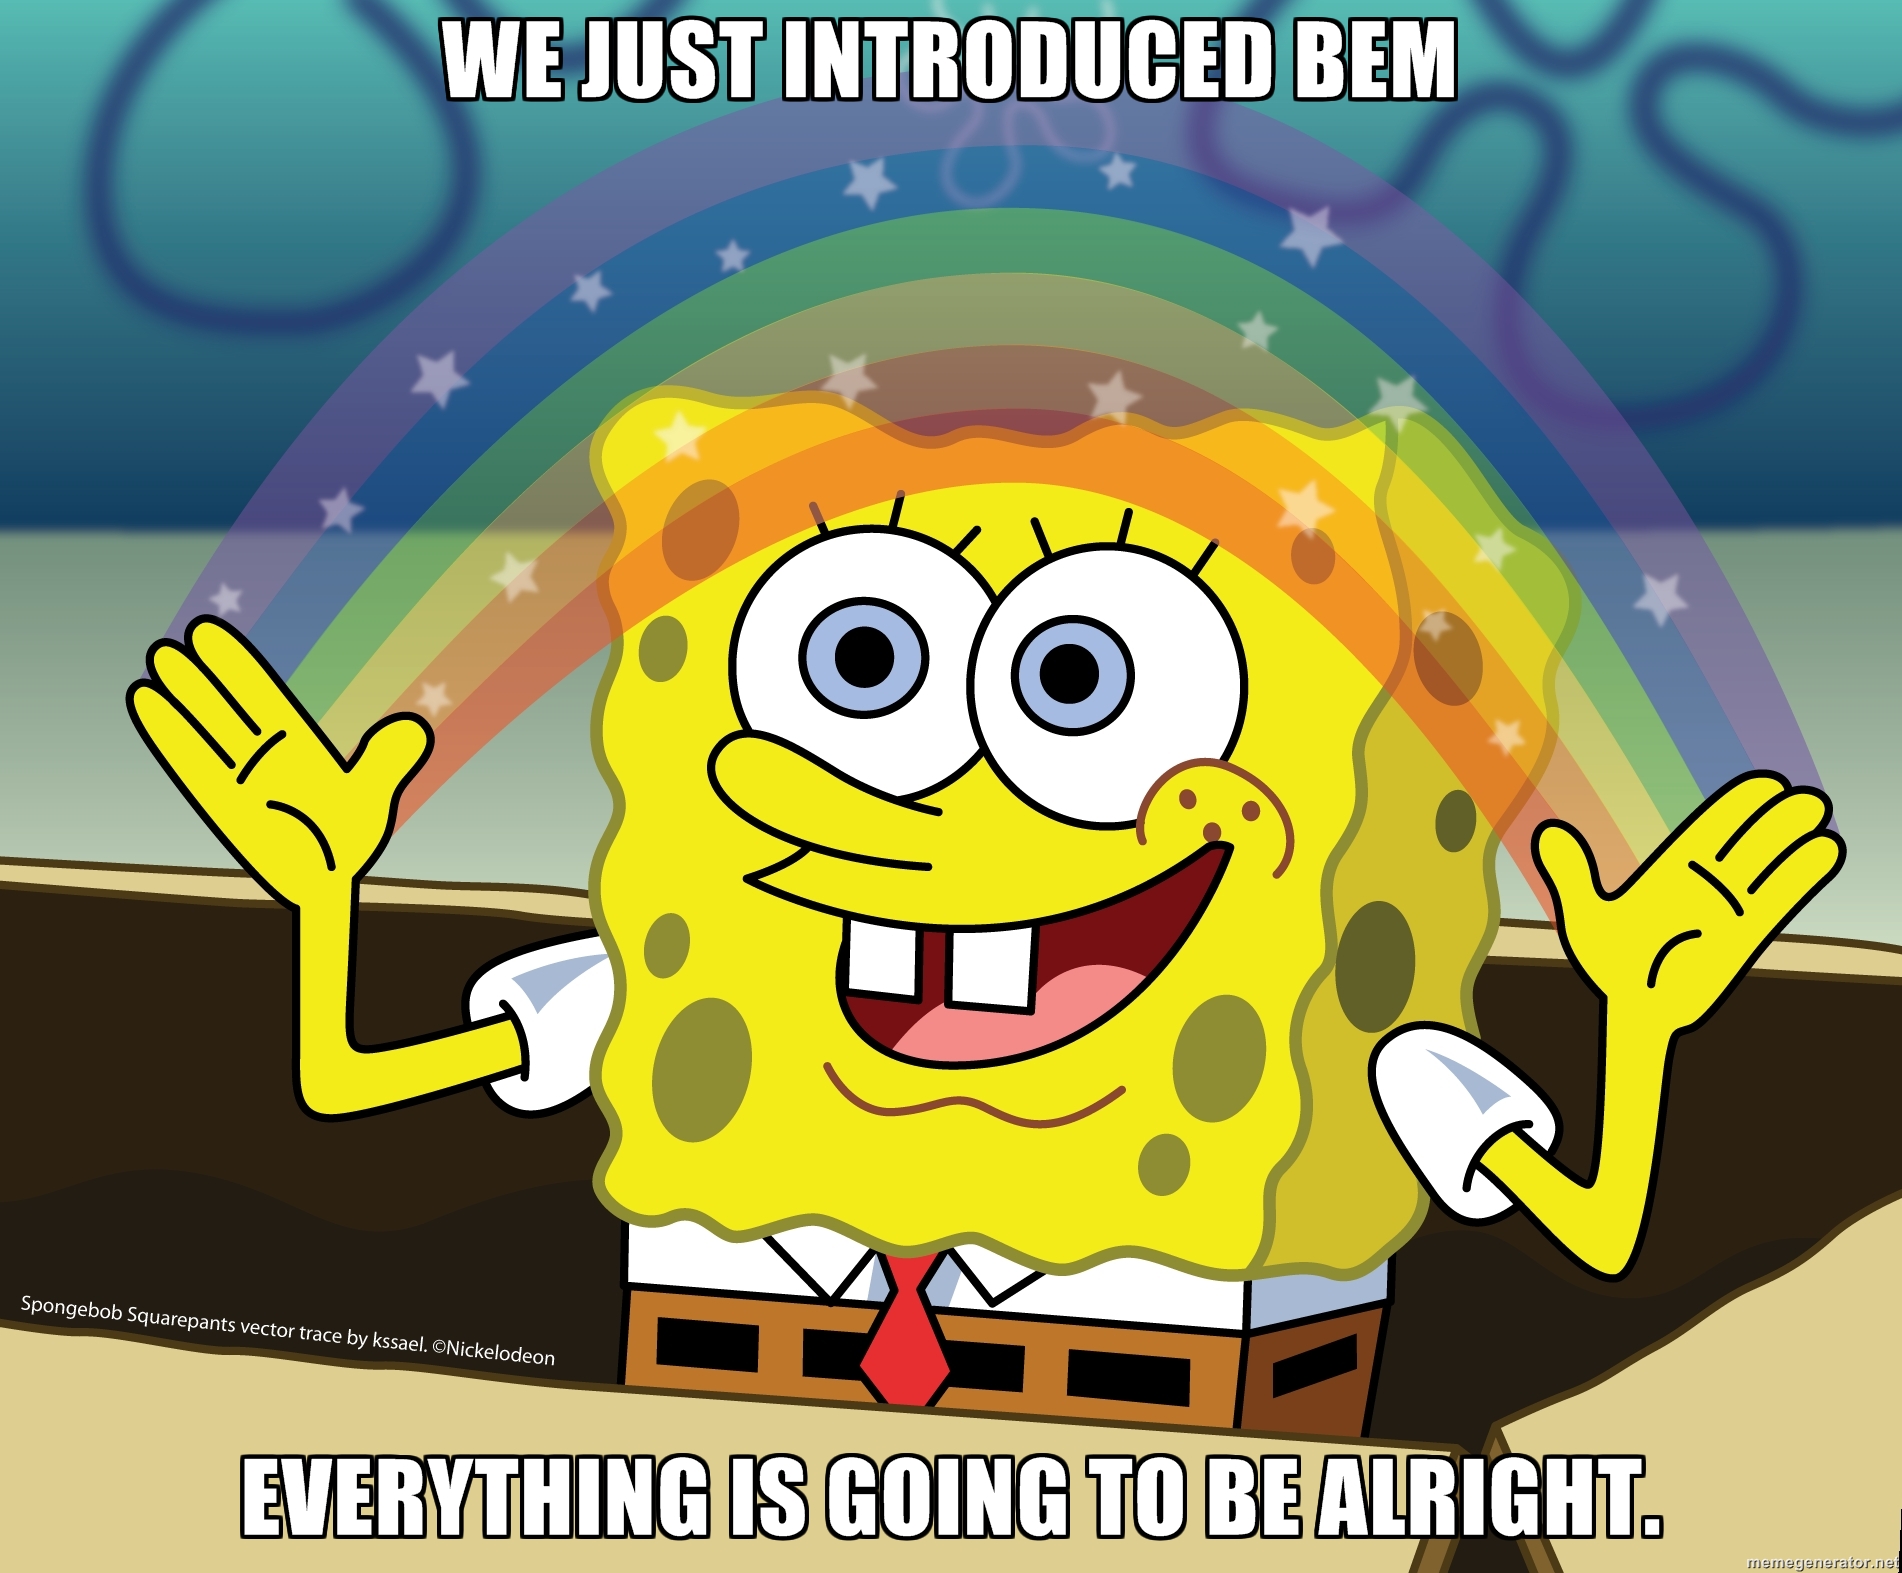 BEM is magic!